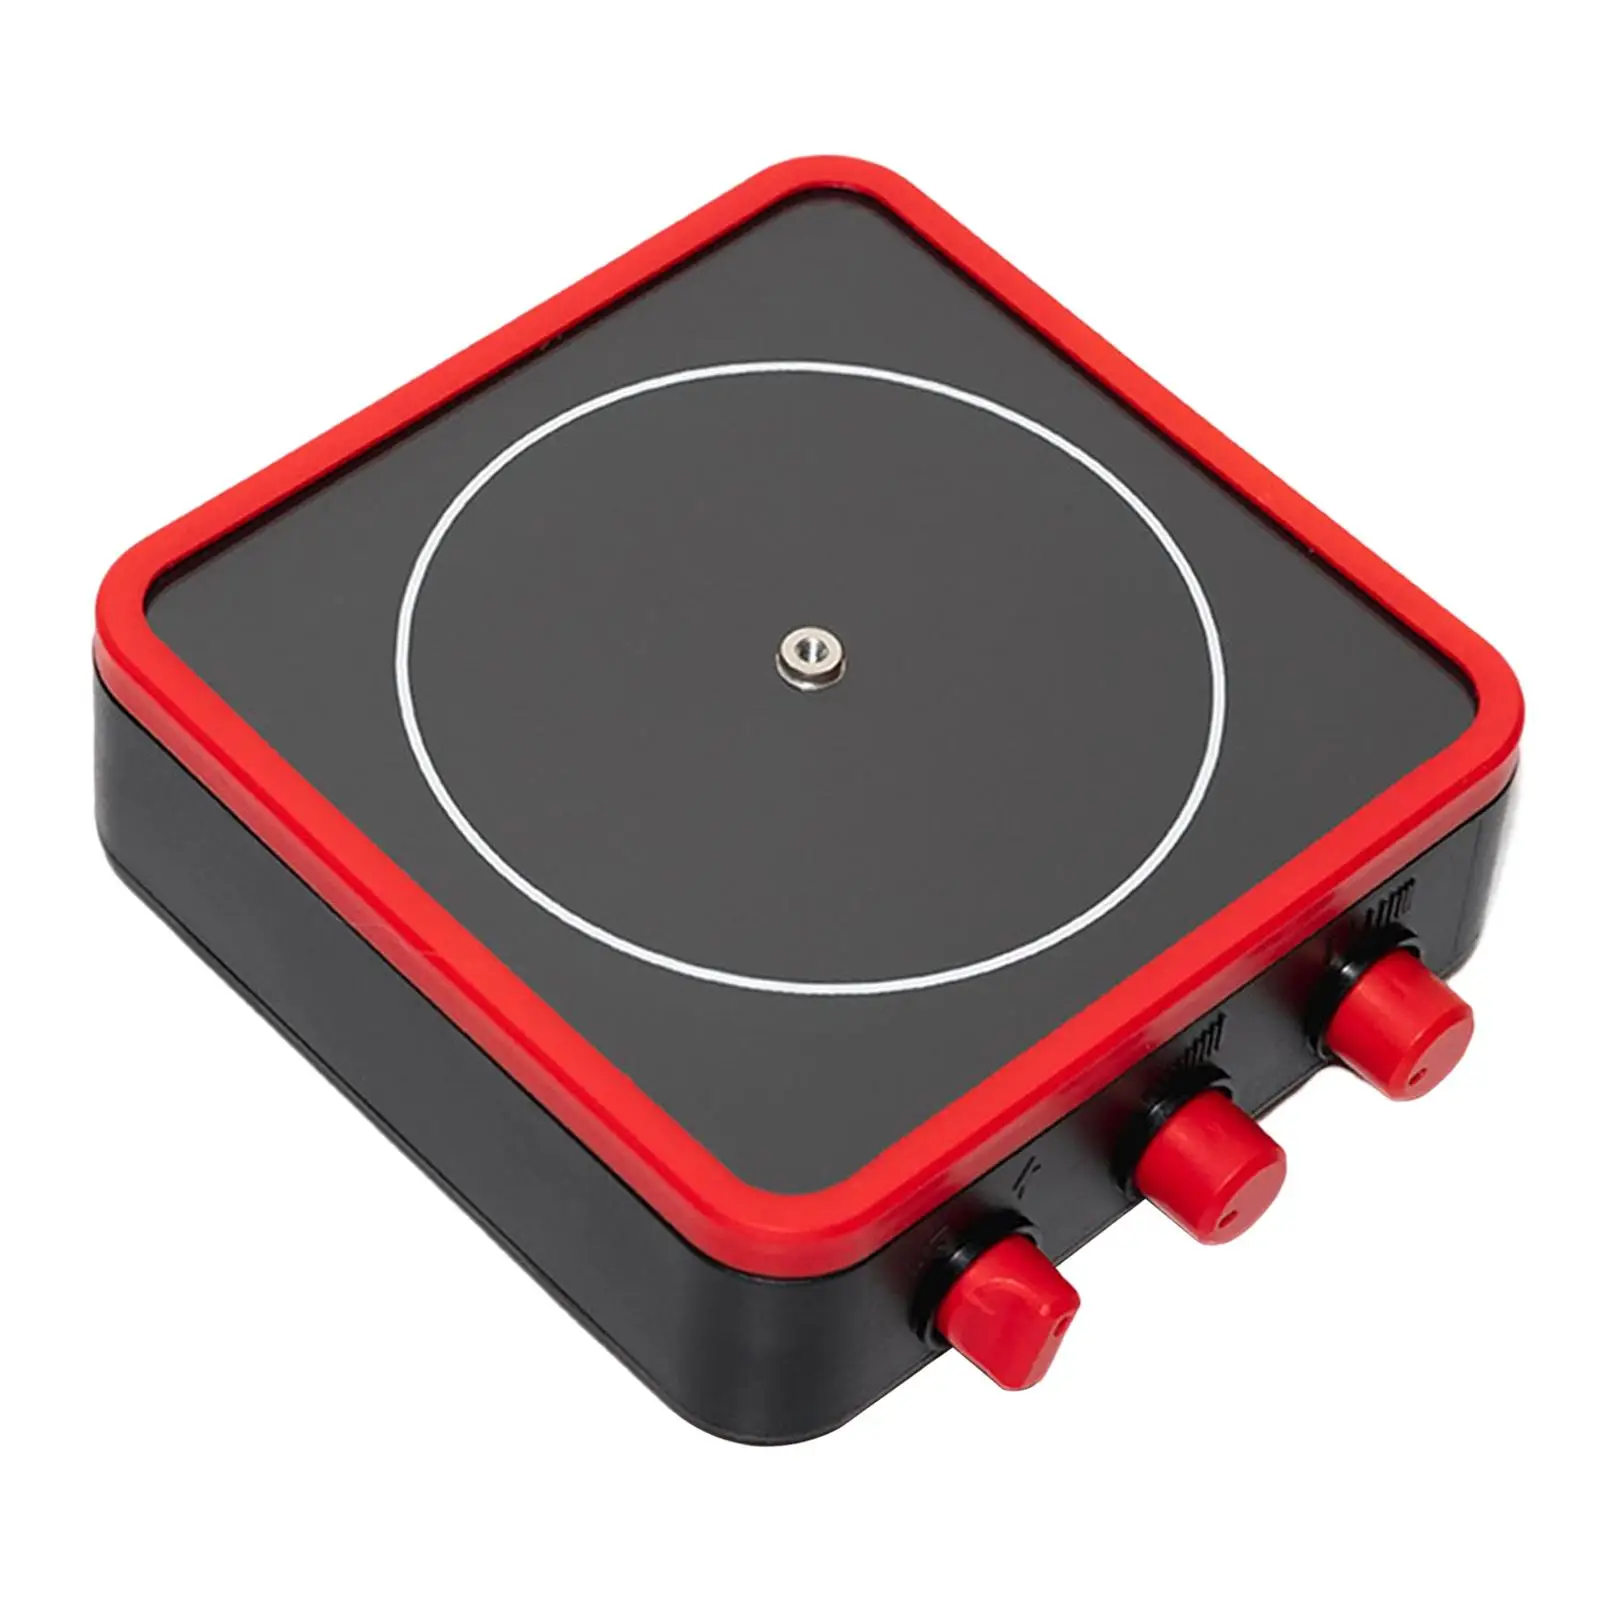 Mini Audio Tesla Coil Education Toy Desktop Toy Simple to Use Tesla Coil Speaker Teaching Aid Teaching Demonstration Physics